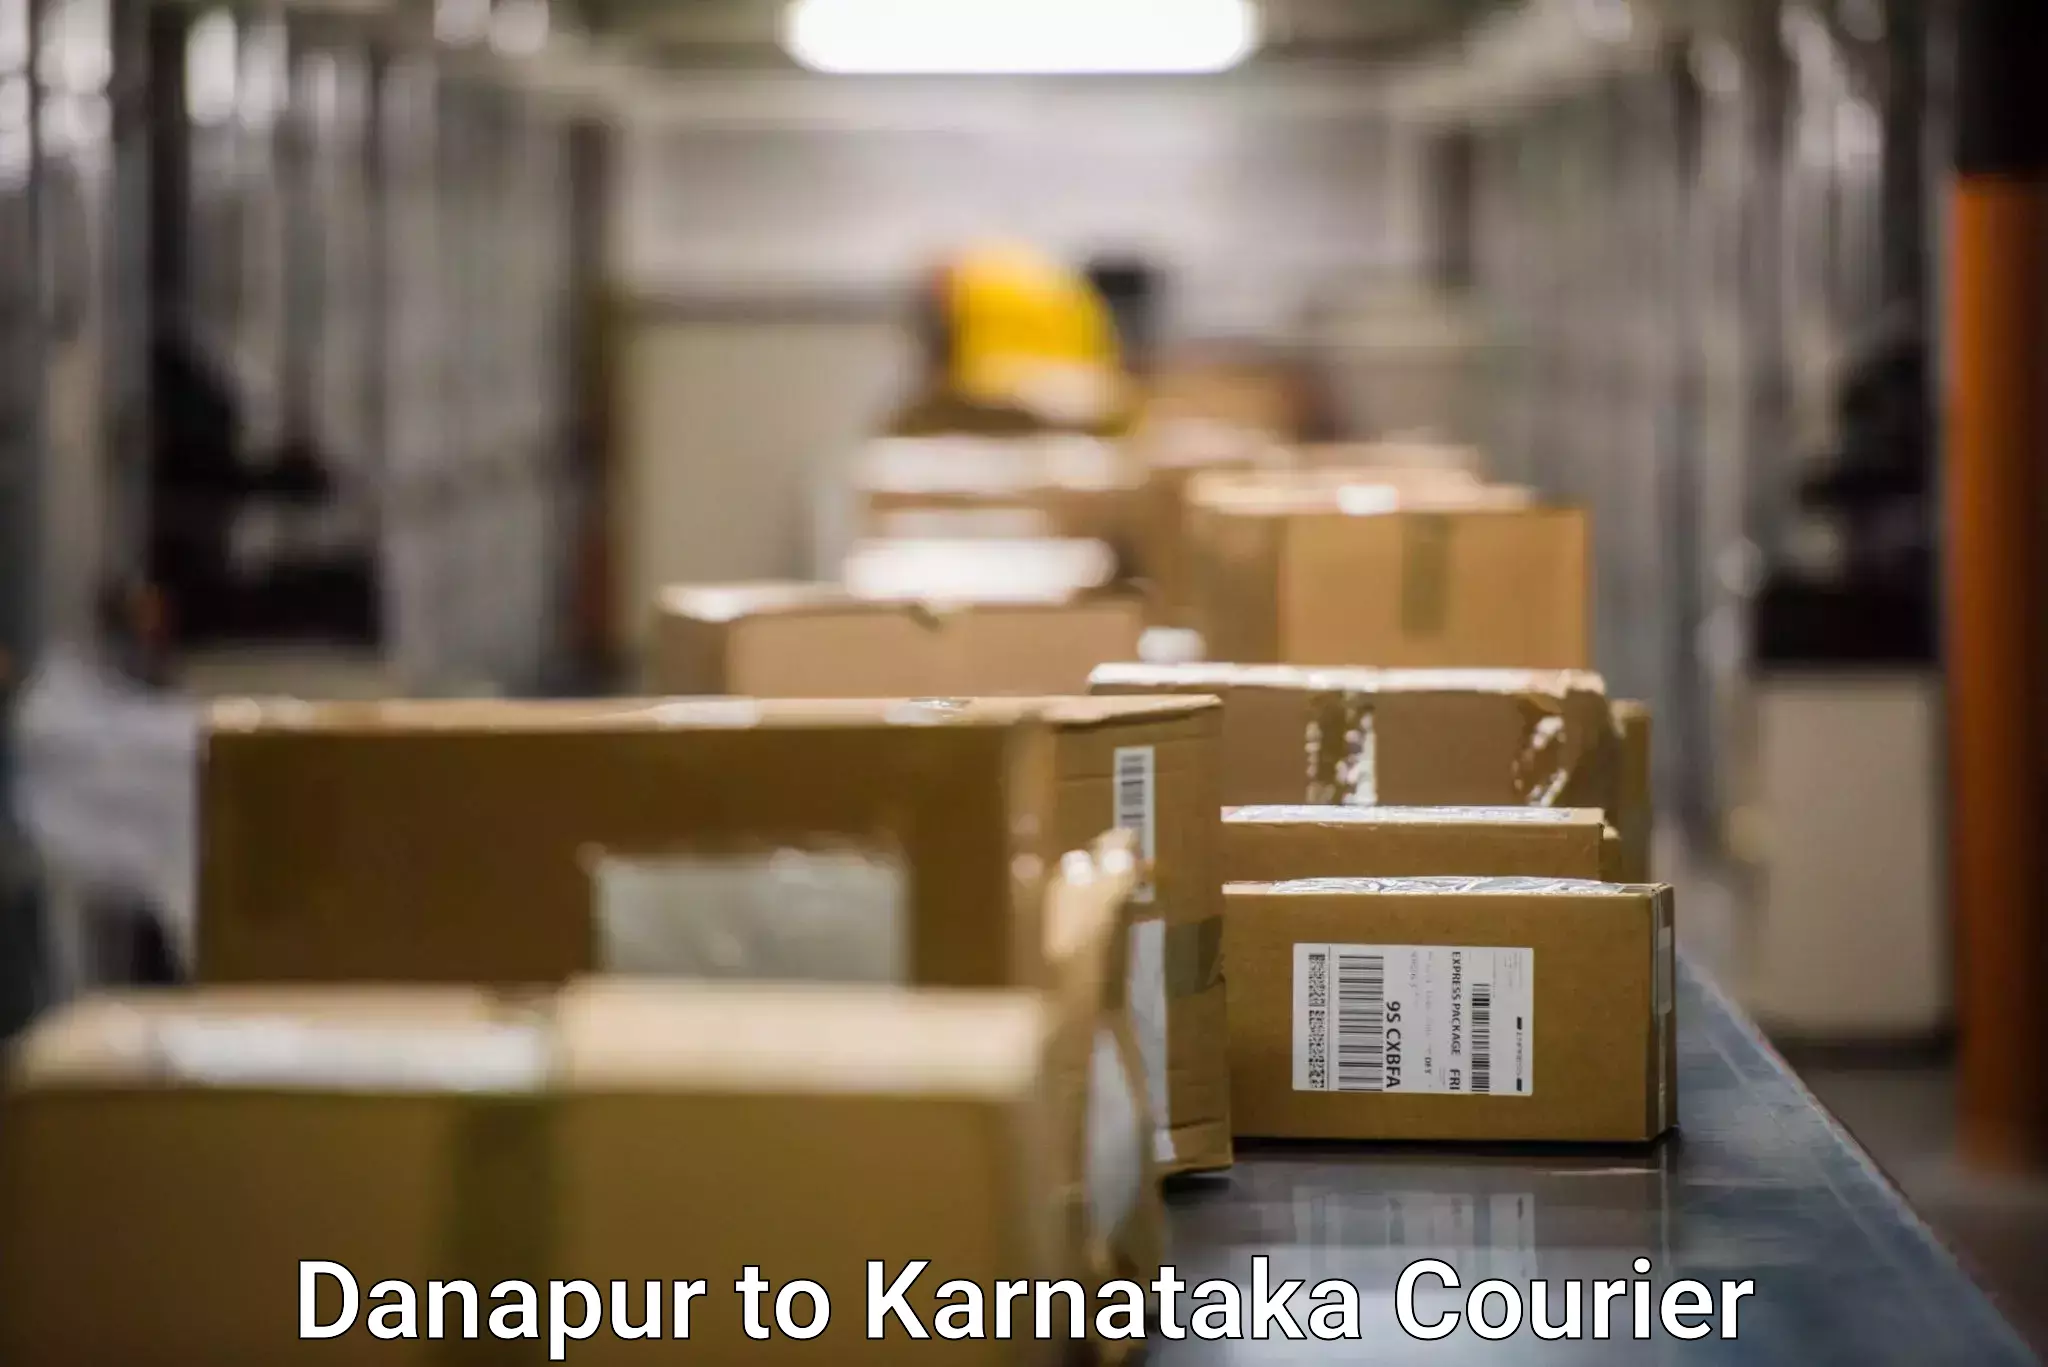 Courier service innovation Danapur to Aurad